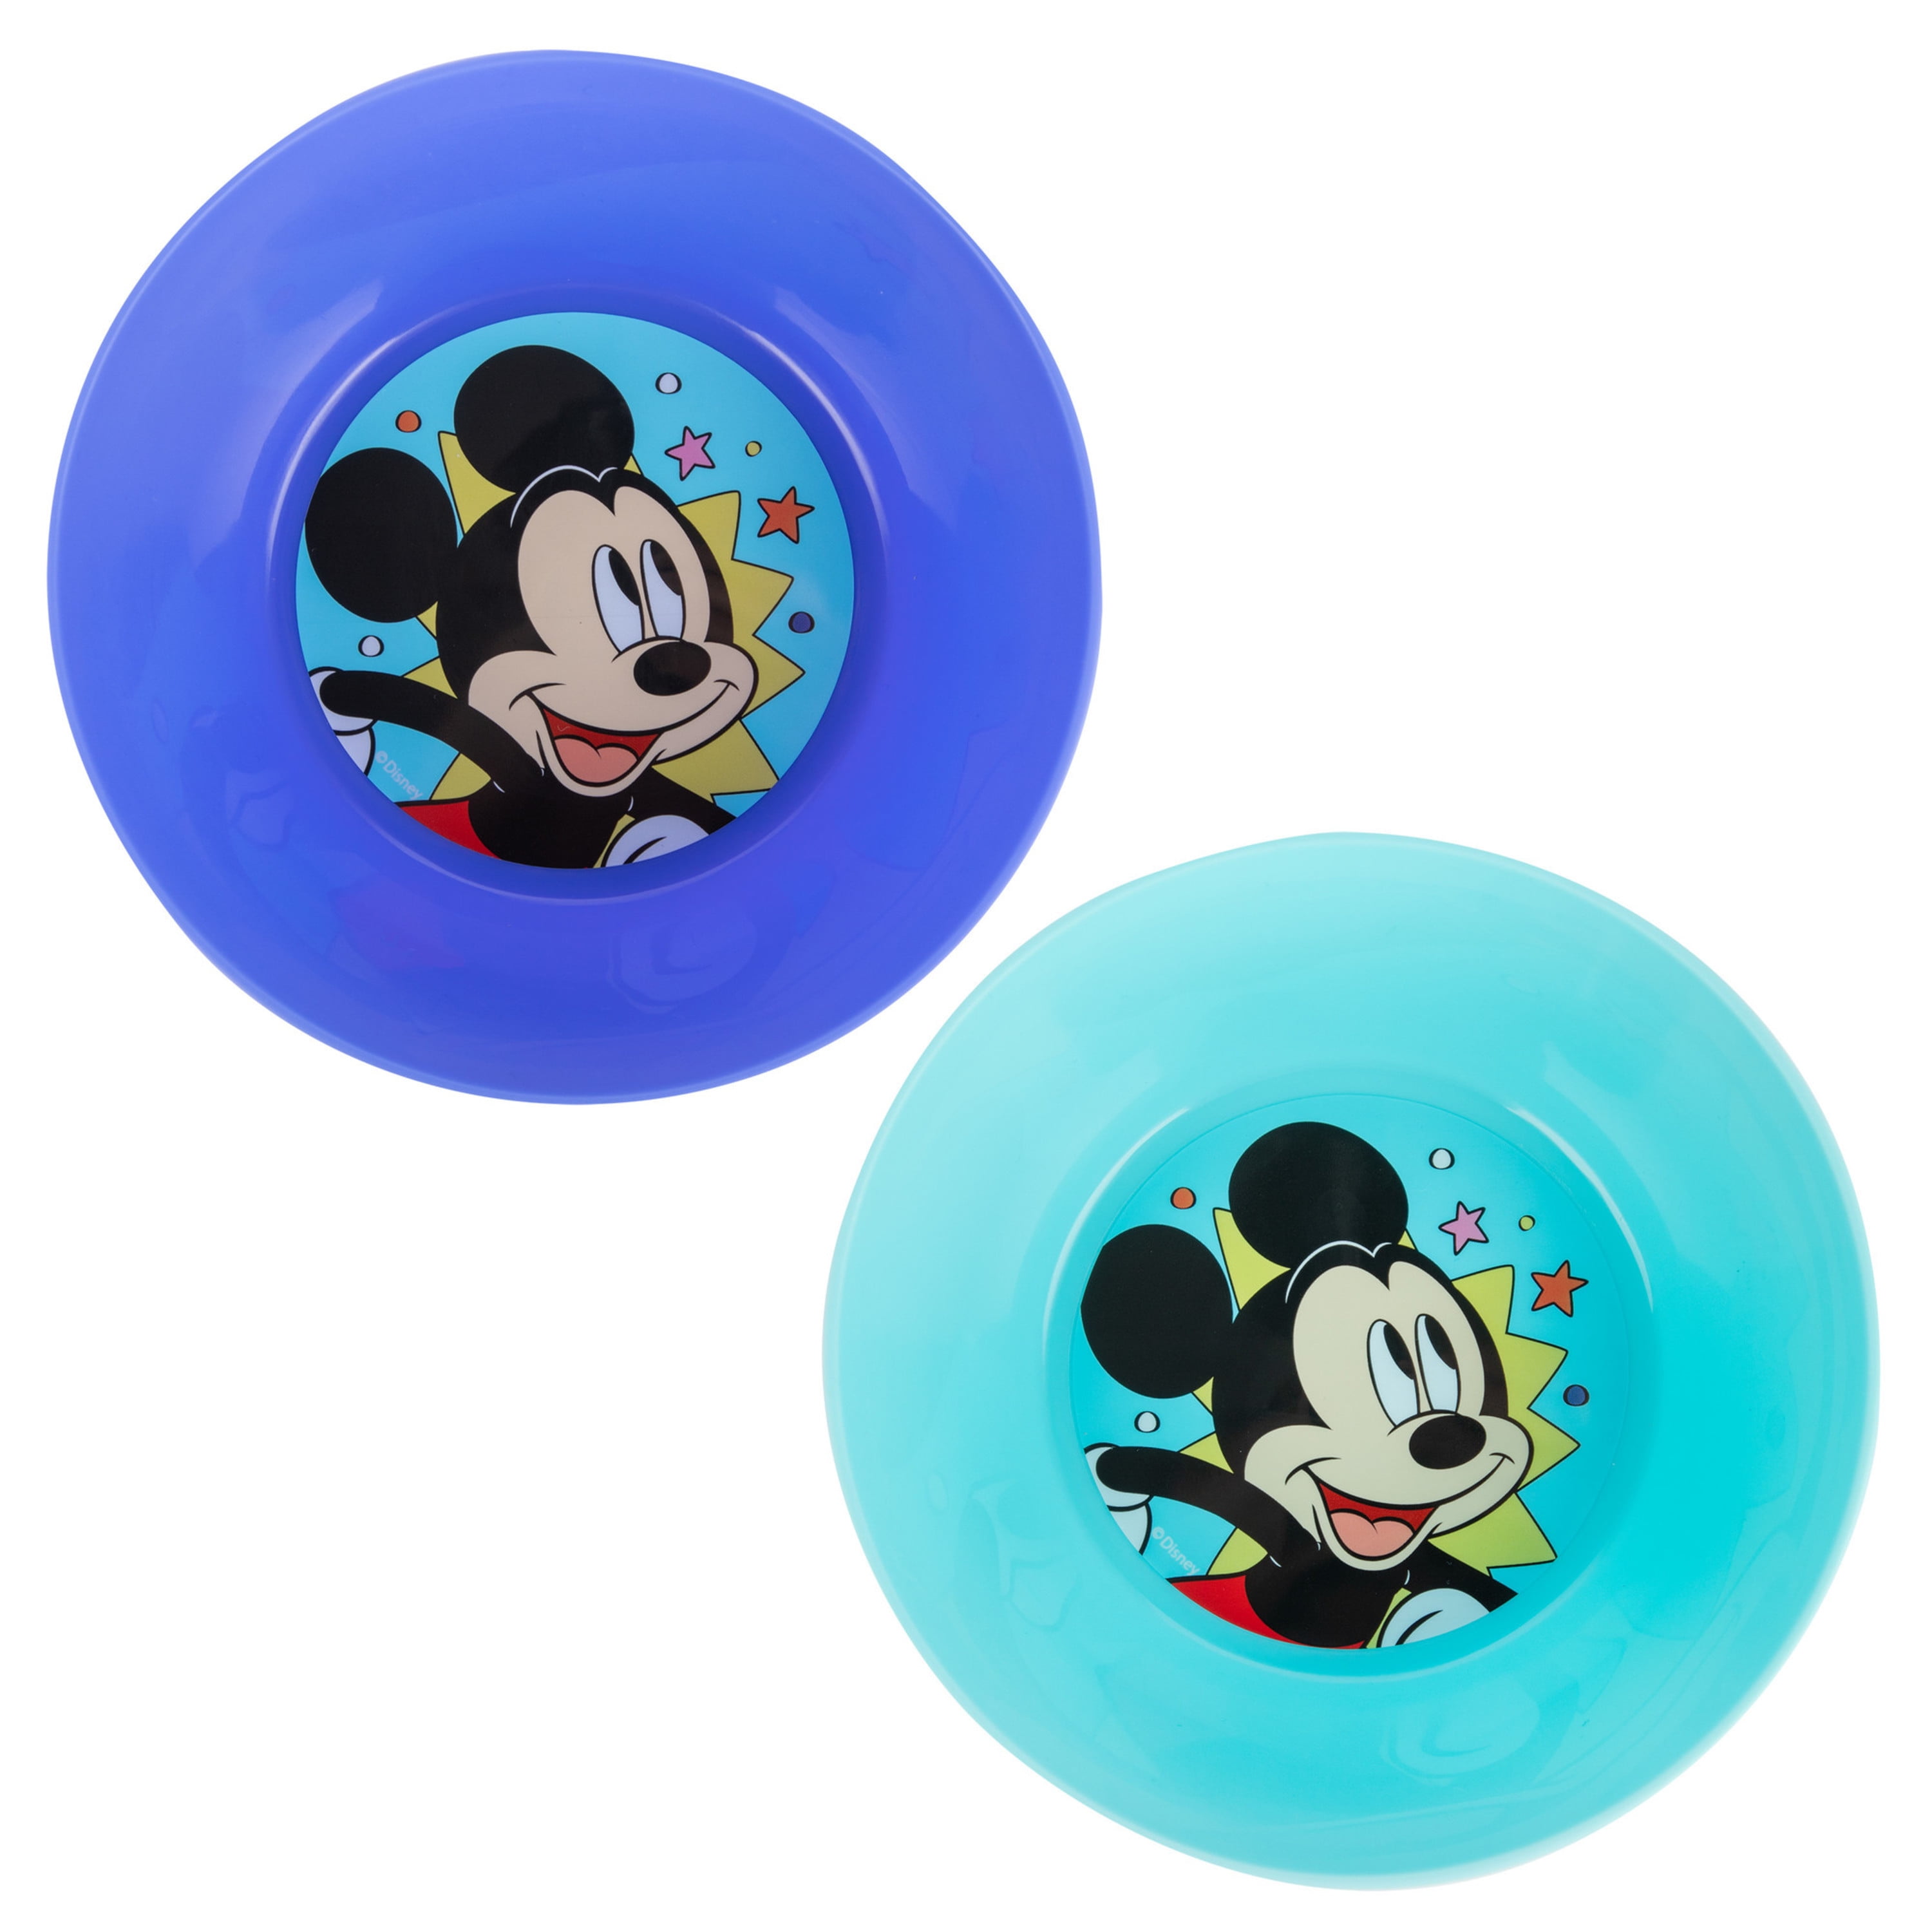 Disney Mickey Mouse Bowl 2 Pack - Dishwasher & Microwave Safe Bowl for Toddler Mealtimes